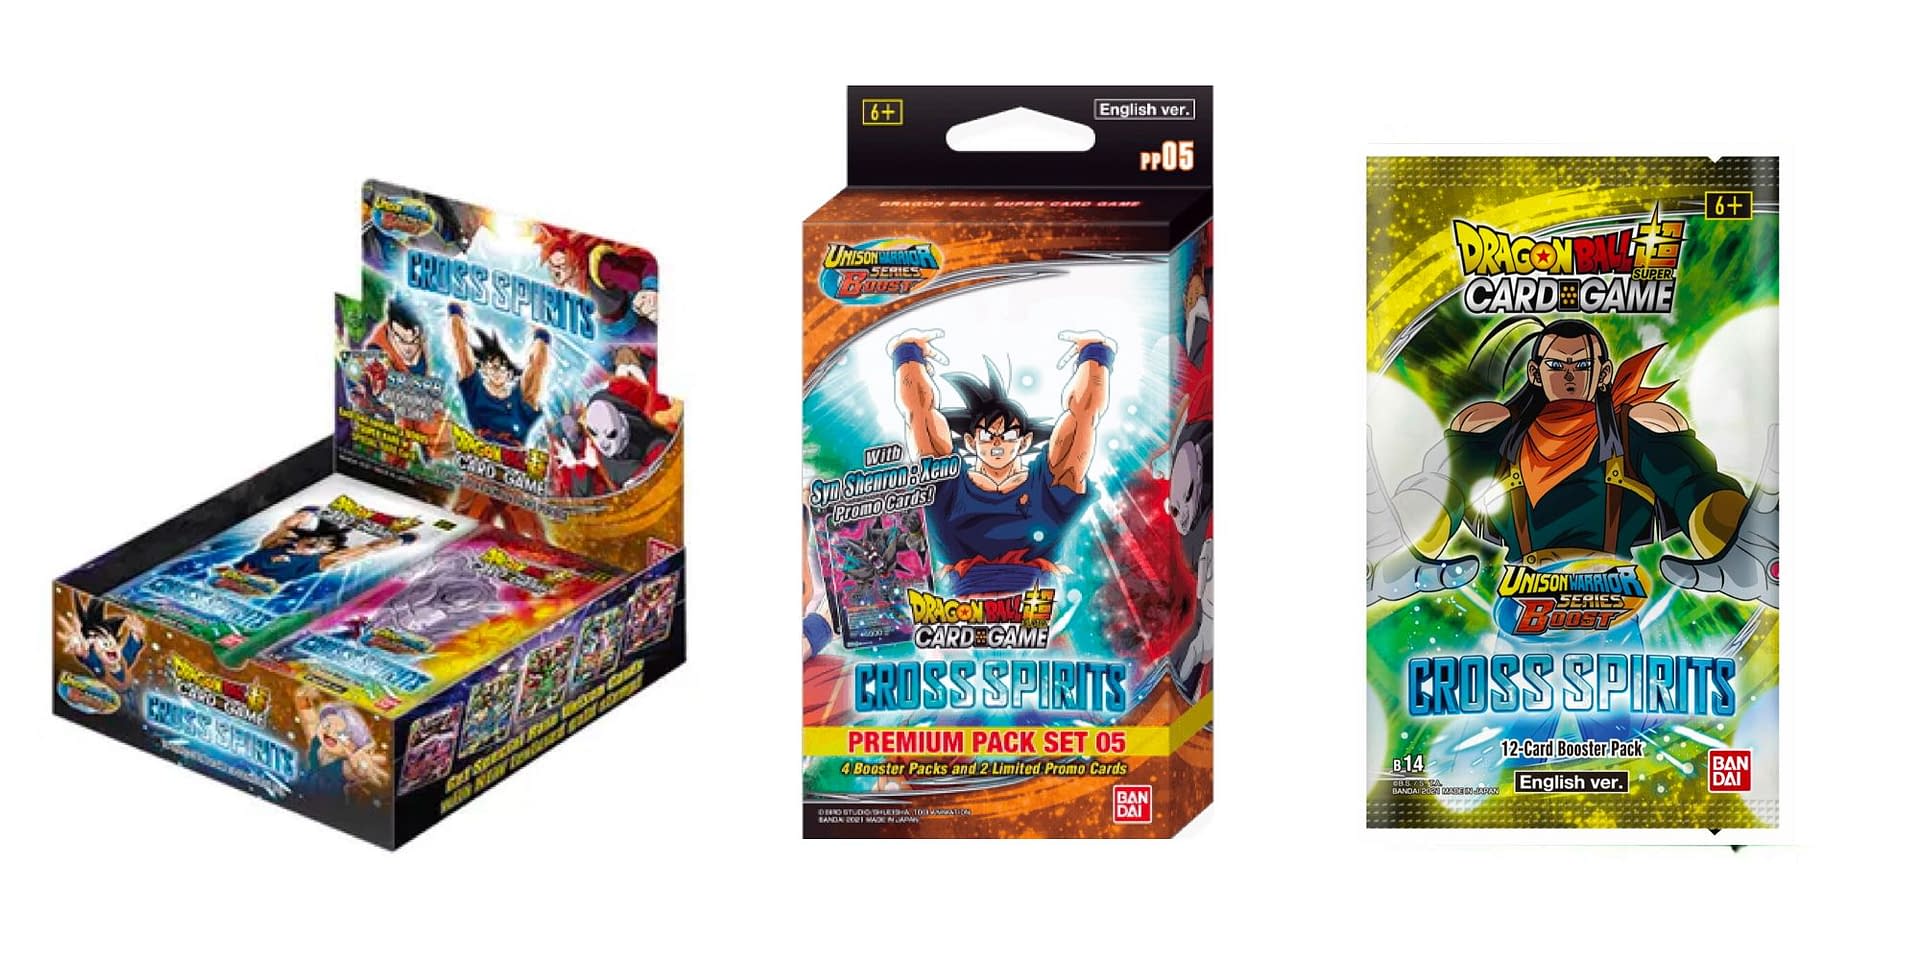 Premium Pack Set PP05 Cross Spirits Dragon Ball Super Card Game 